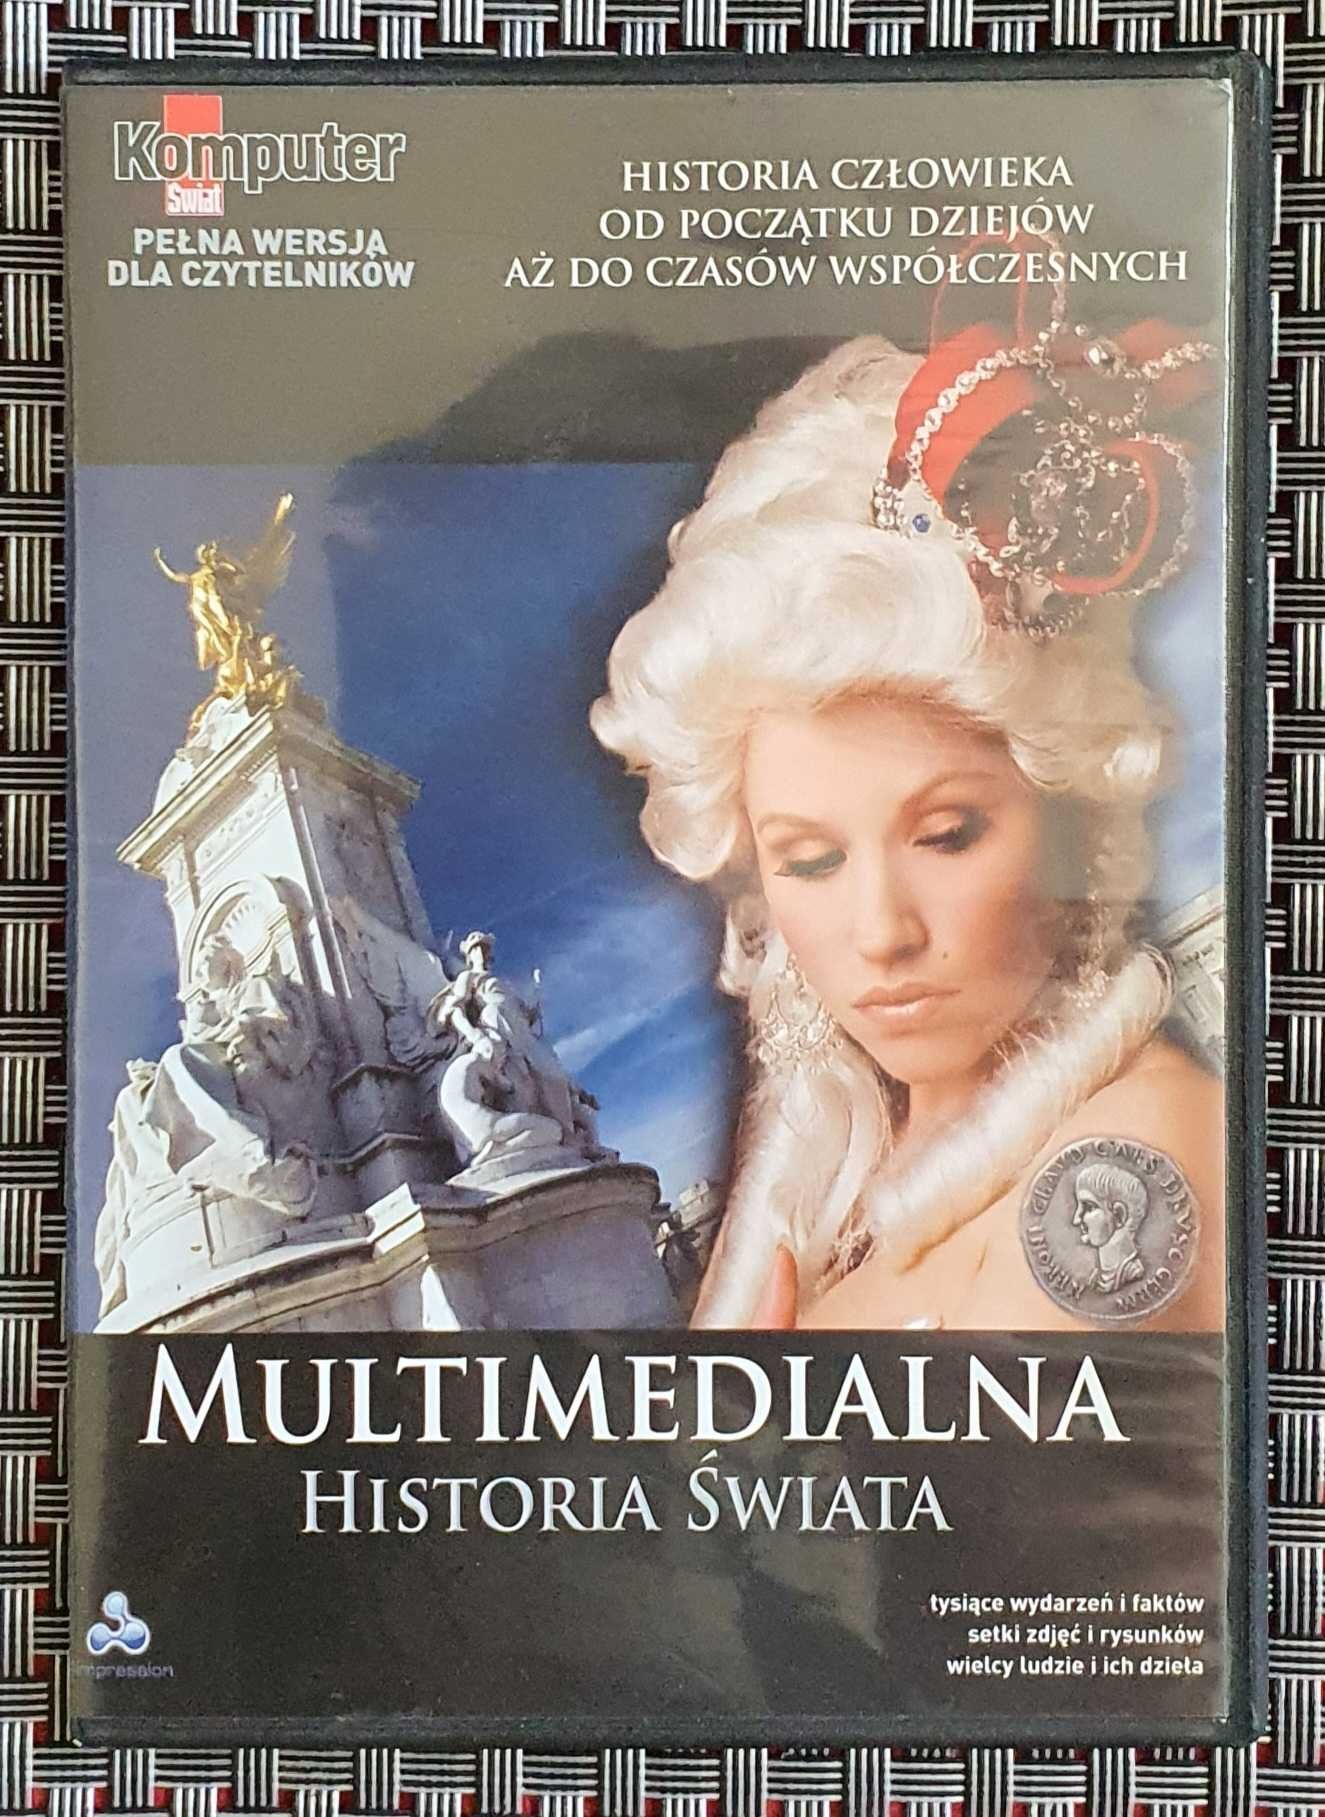 Dvd - Multimedialna encyklopedia świata (PC dvd)